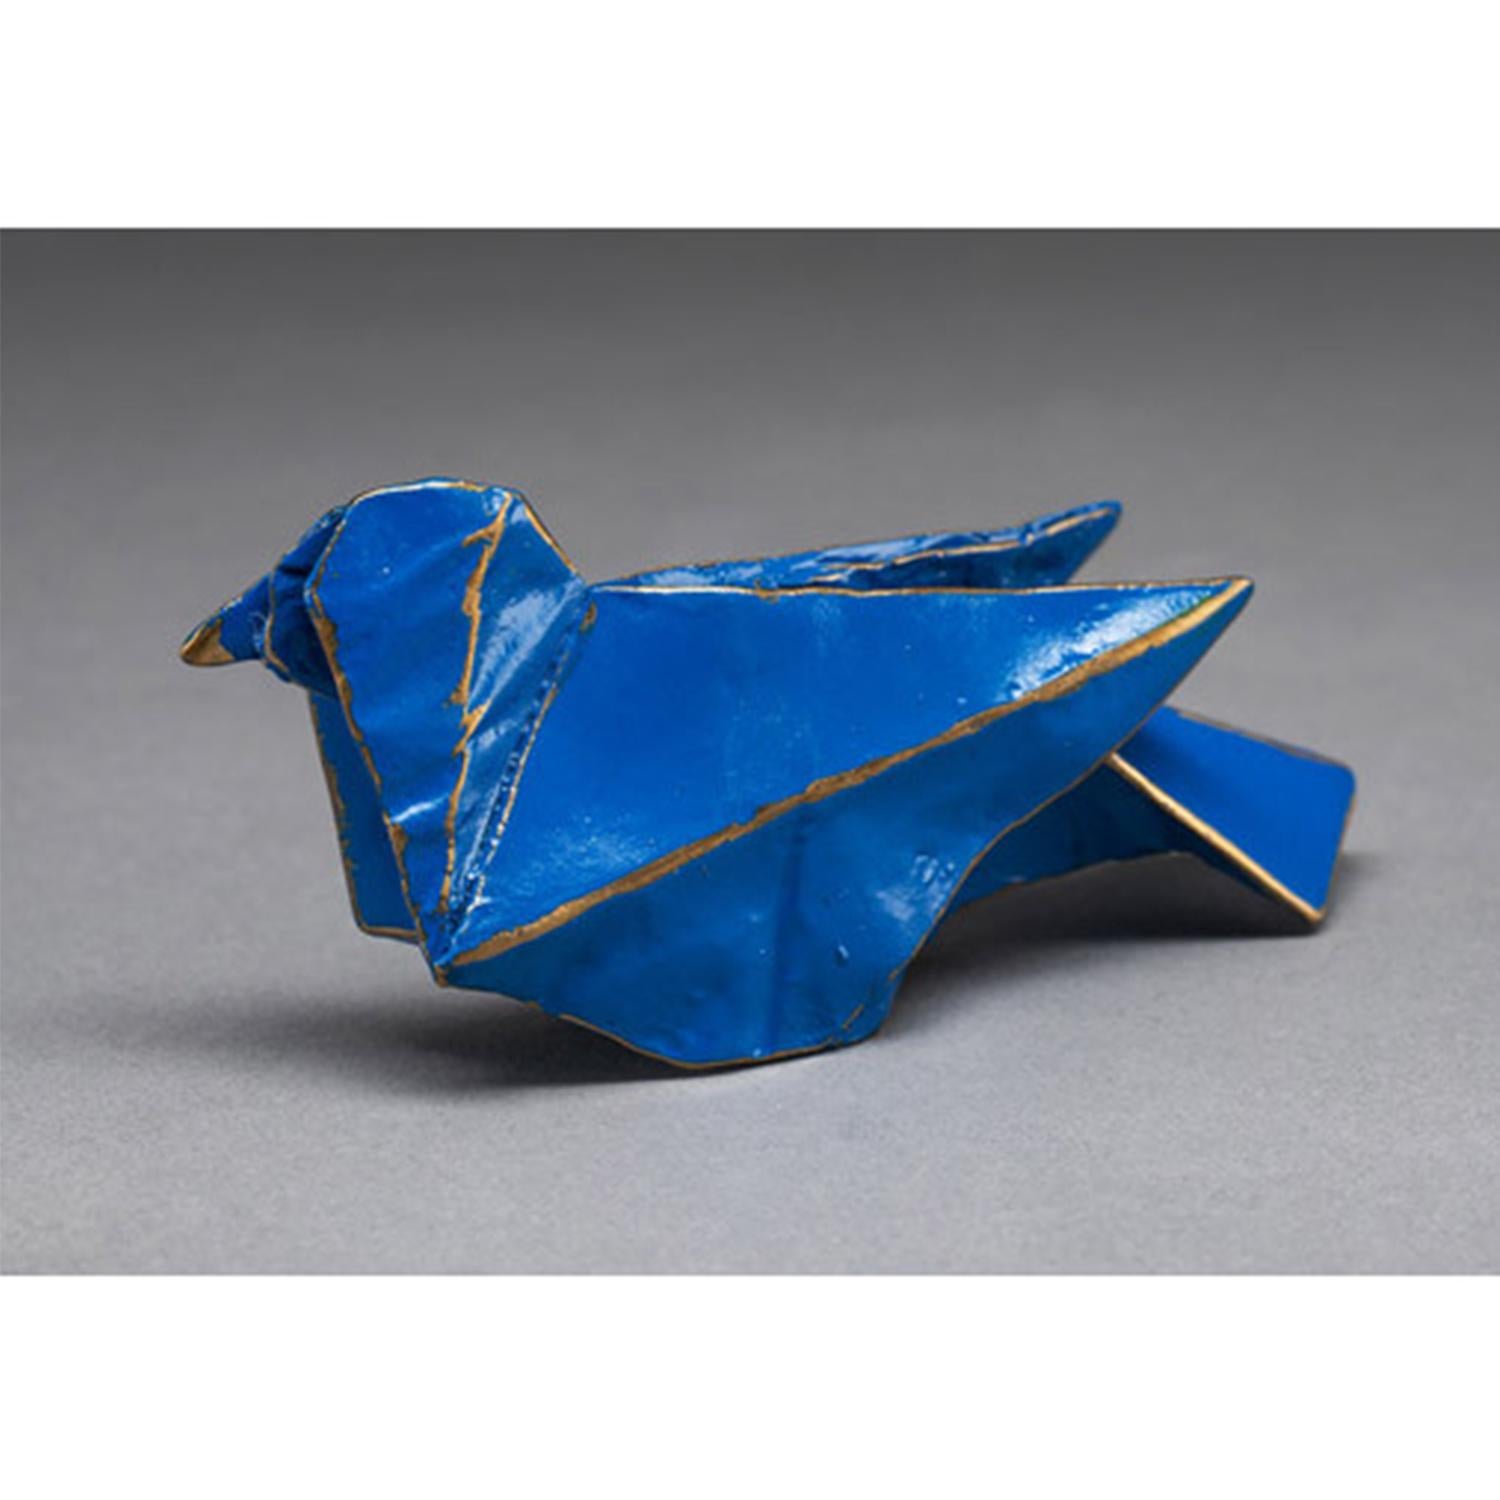 Kevin Box Figurative Sculpture - Bird in the Hand - Robert J. Lang